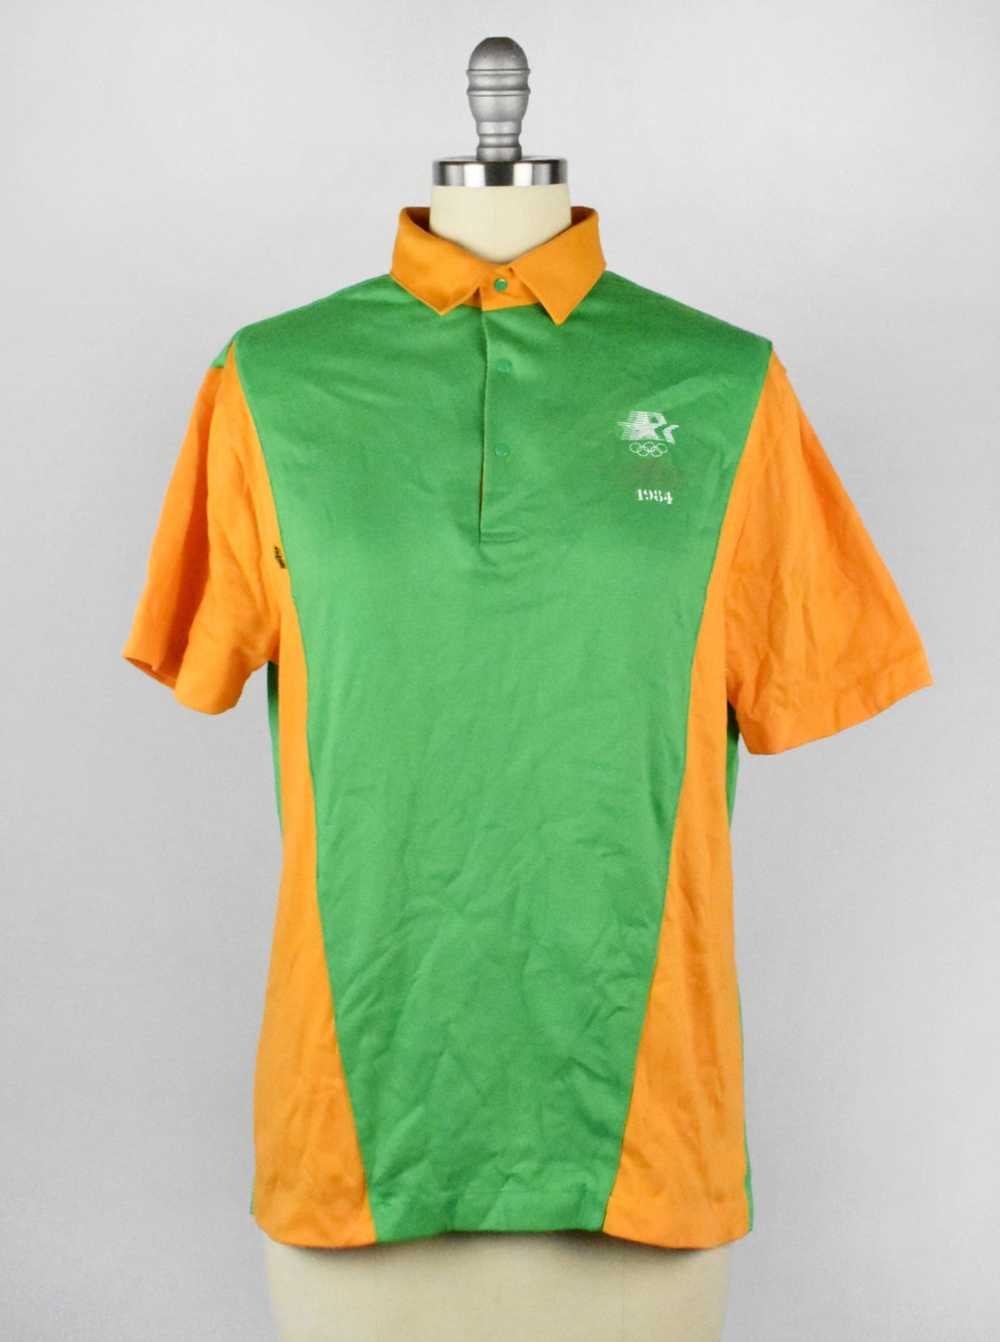 Levi's 1984 Los Angeles Olympics Polo Shirt - image 1